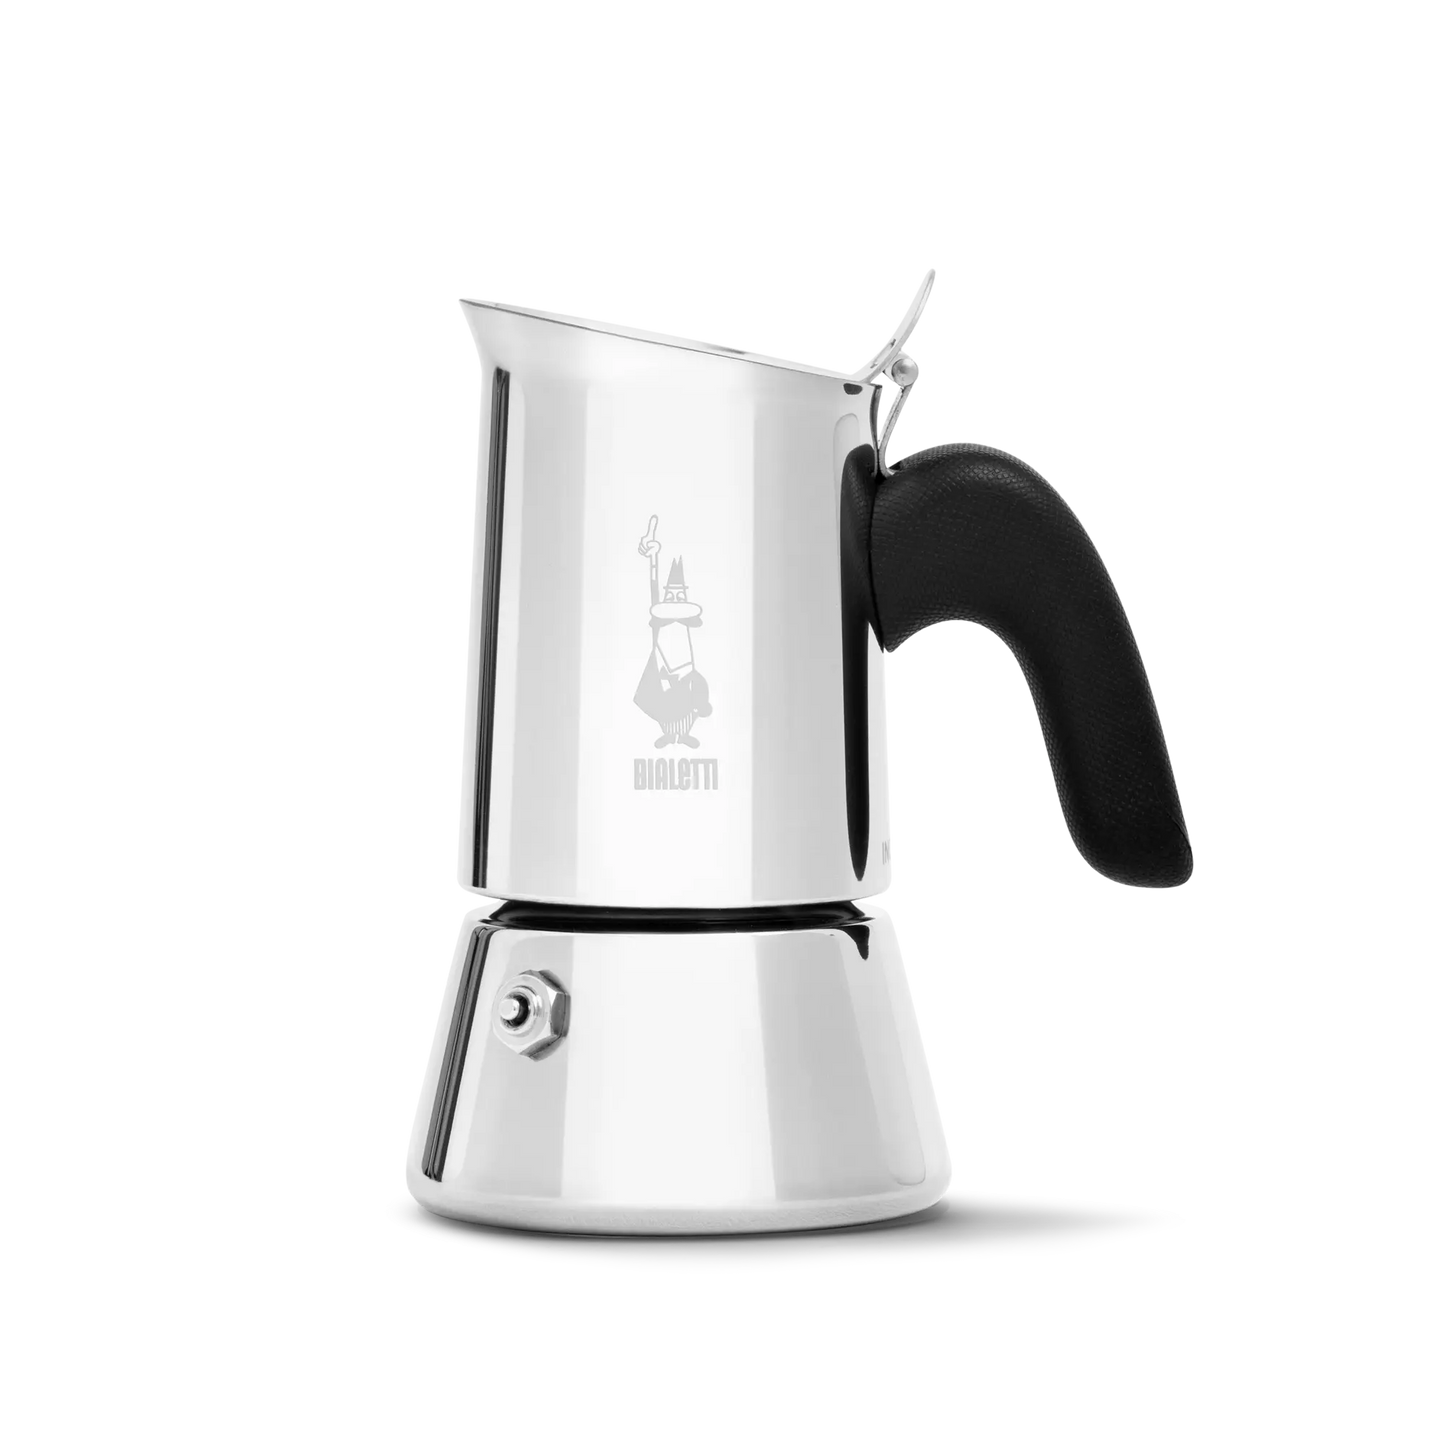 Bialetti Espresso Maker - 2 Cups Vogel Kaffee